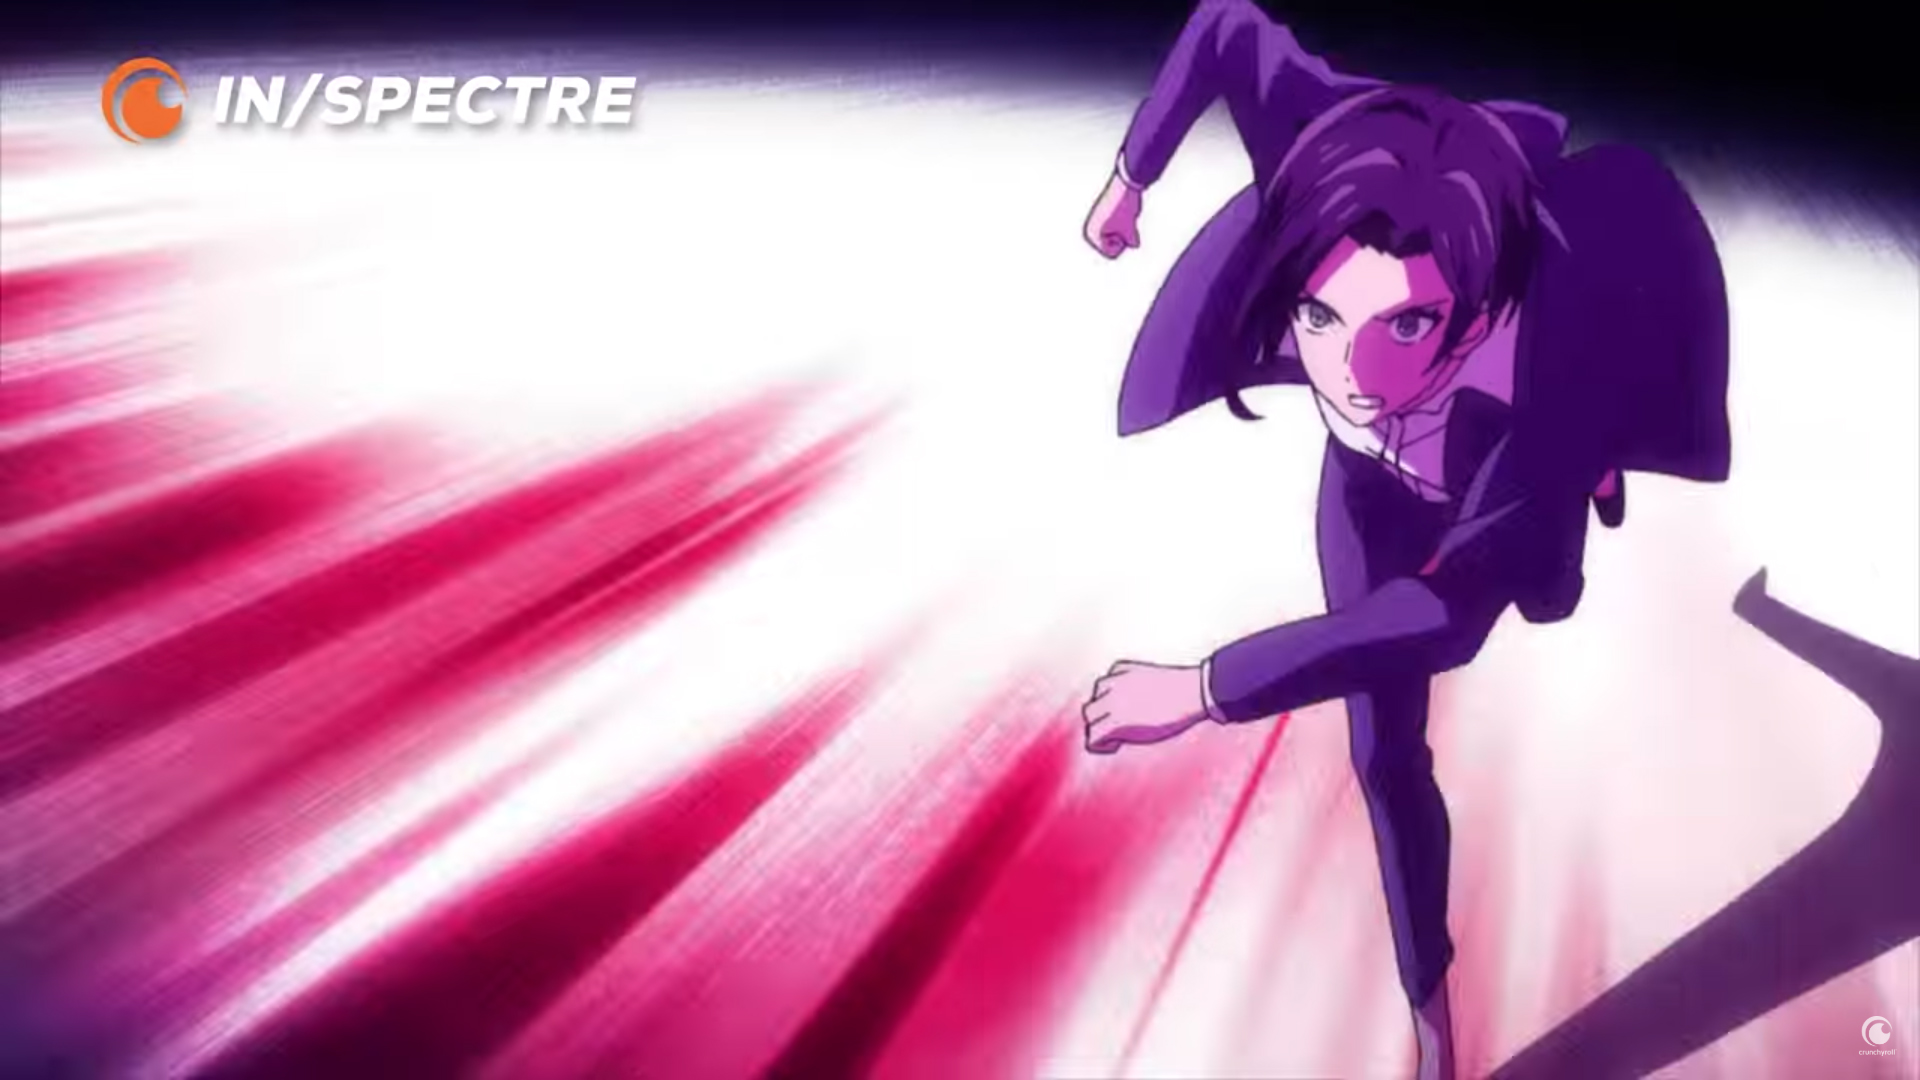 Crunchyroll's original anime series shown off in dramatic new trailer